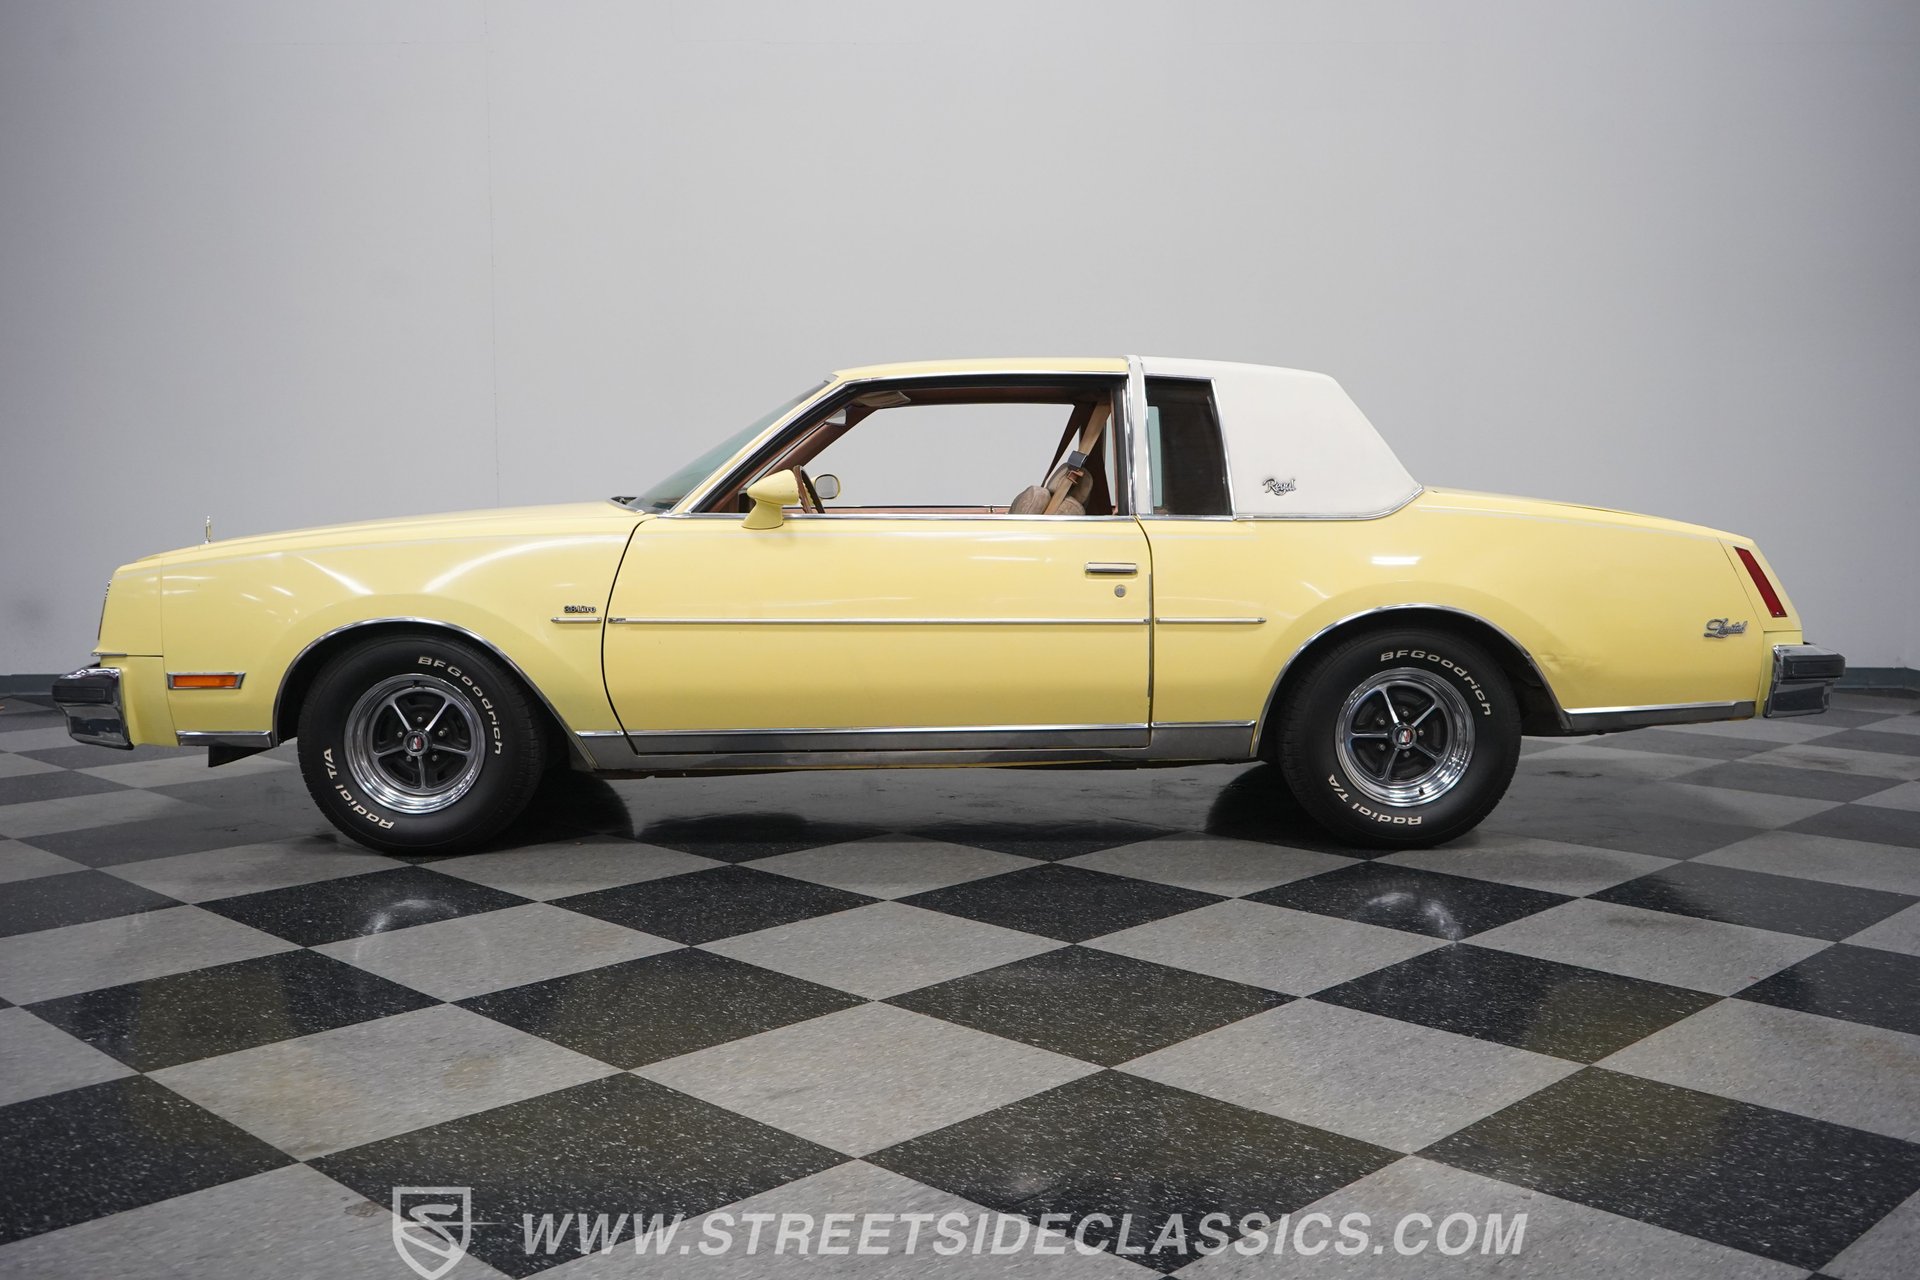 1980 Buick Regal | Classic Cars for Sale - Streetside Classics